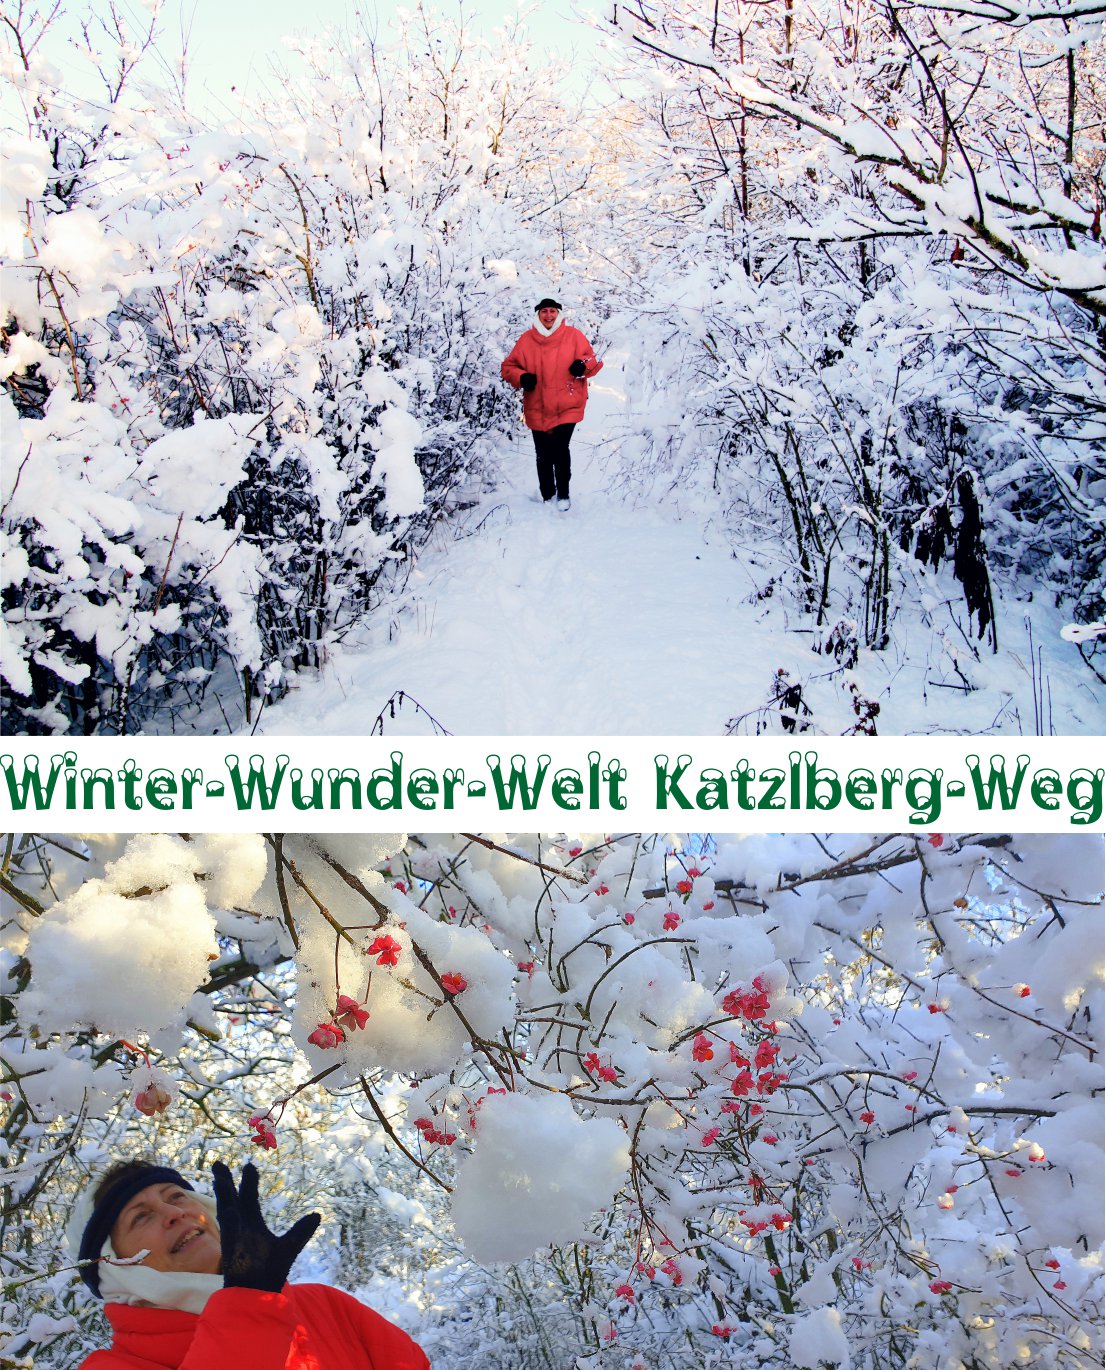 Winter-Wunder-Welt  "Katzlberg-Weg"